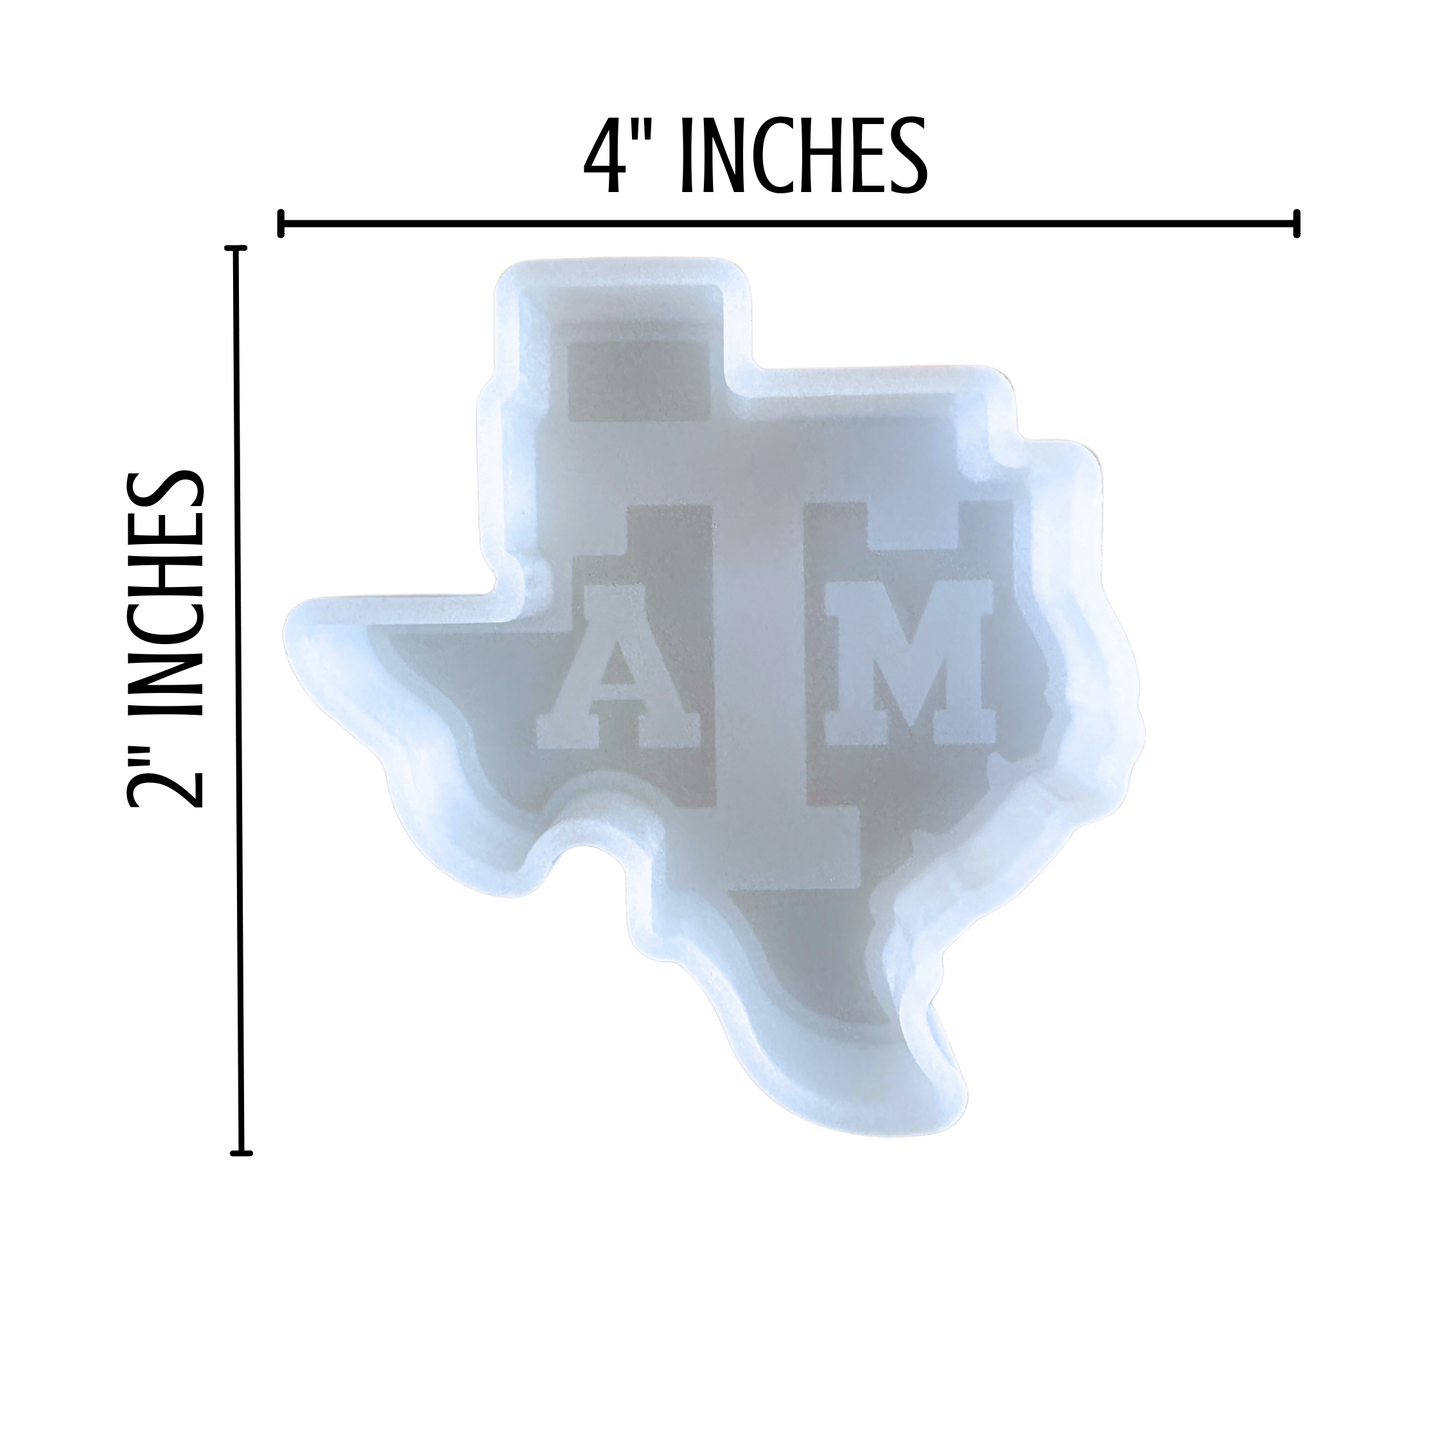 Texas College Football Freshie Silicone Mold 2 x 4 x 0.8”